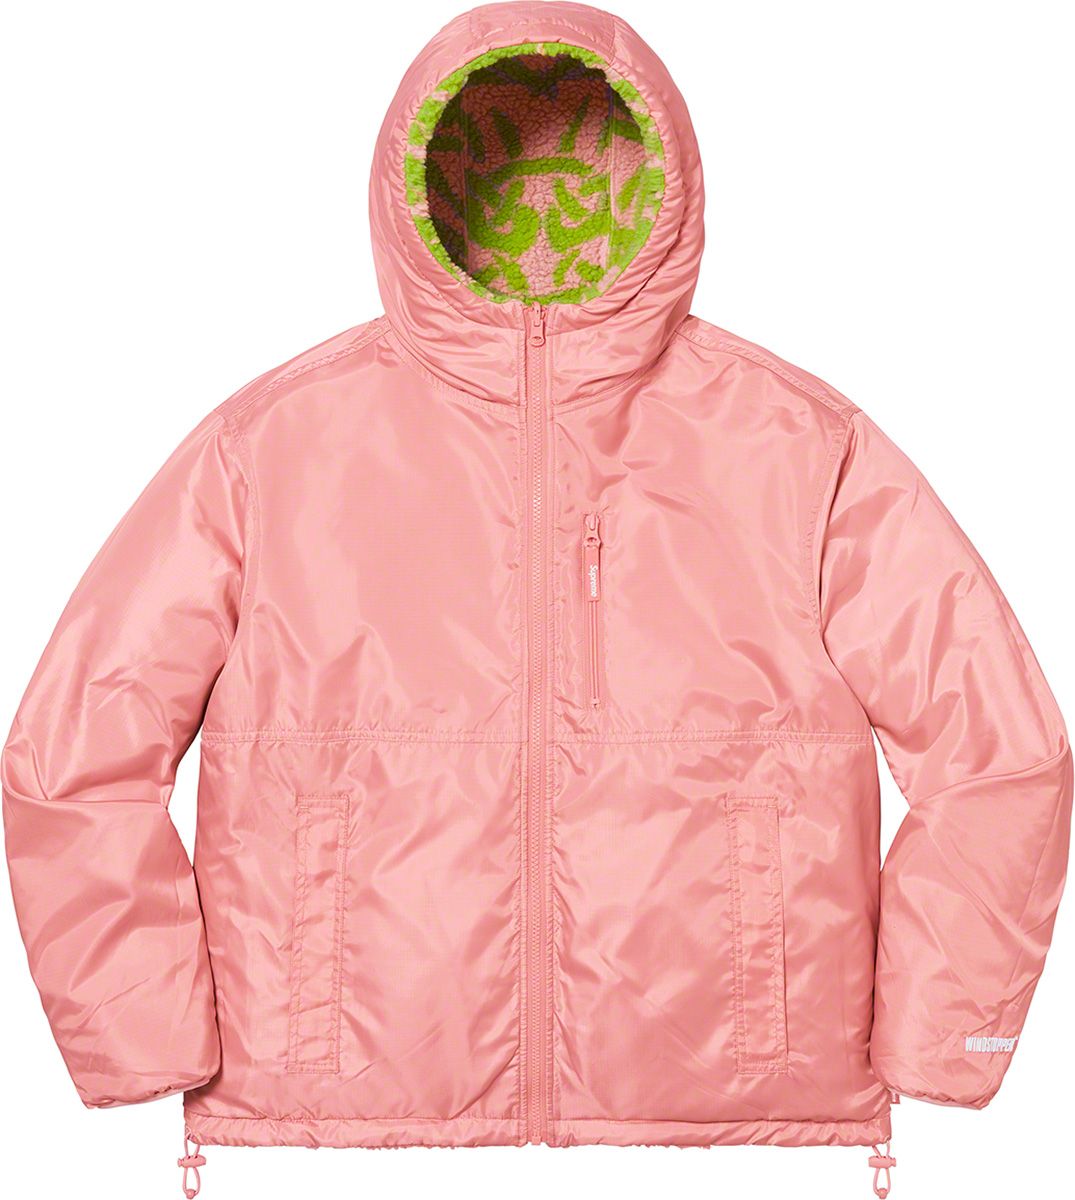 Supreme®/Skittles®/<wbr>Polartec® Jacket - Fall/Winter 2021 